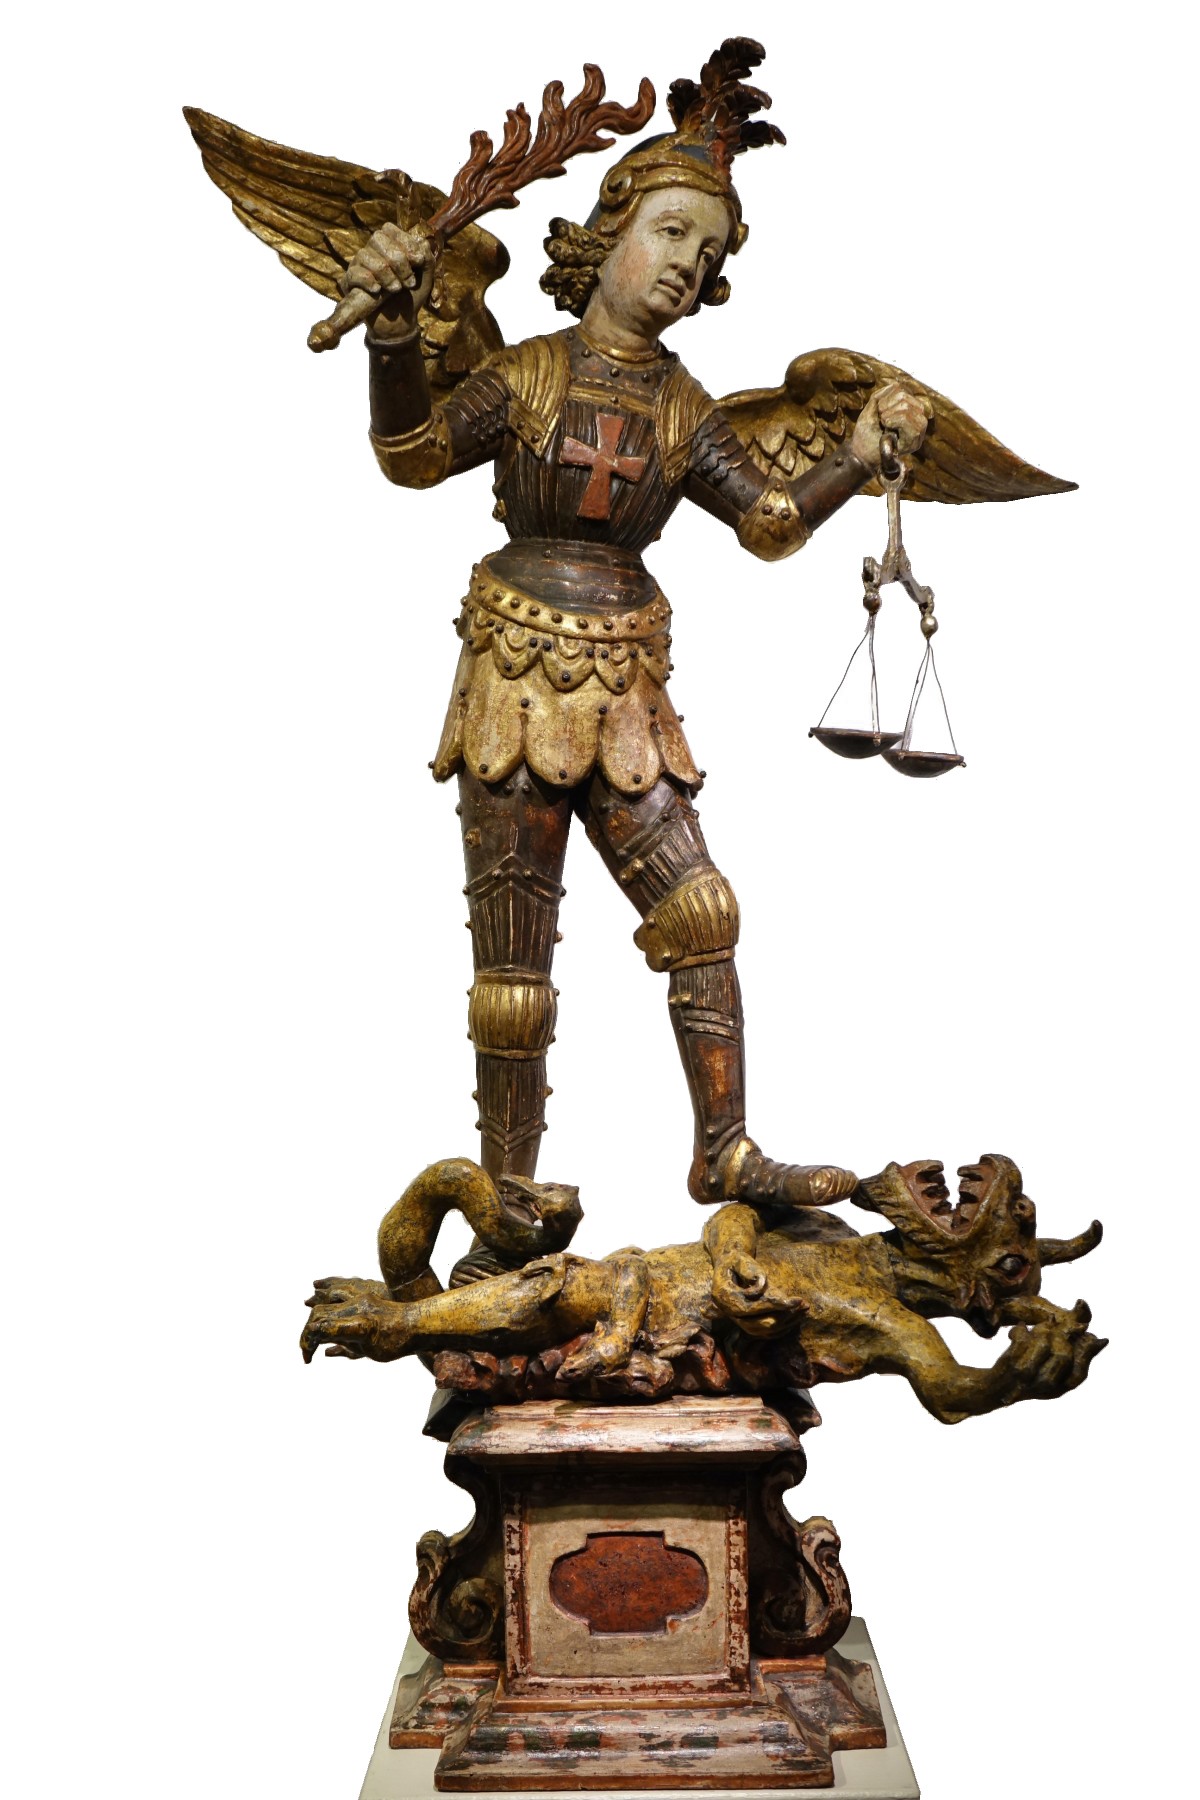 Renaissance Collection Josephs Studio by Roman Exclusive St Michael The Archangel Defeating Satan Figurine 7.25-Inch 60694 